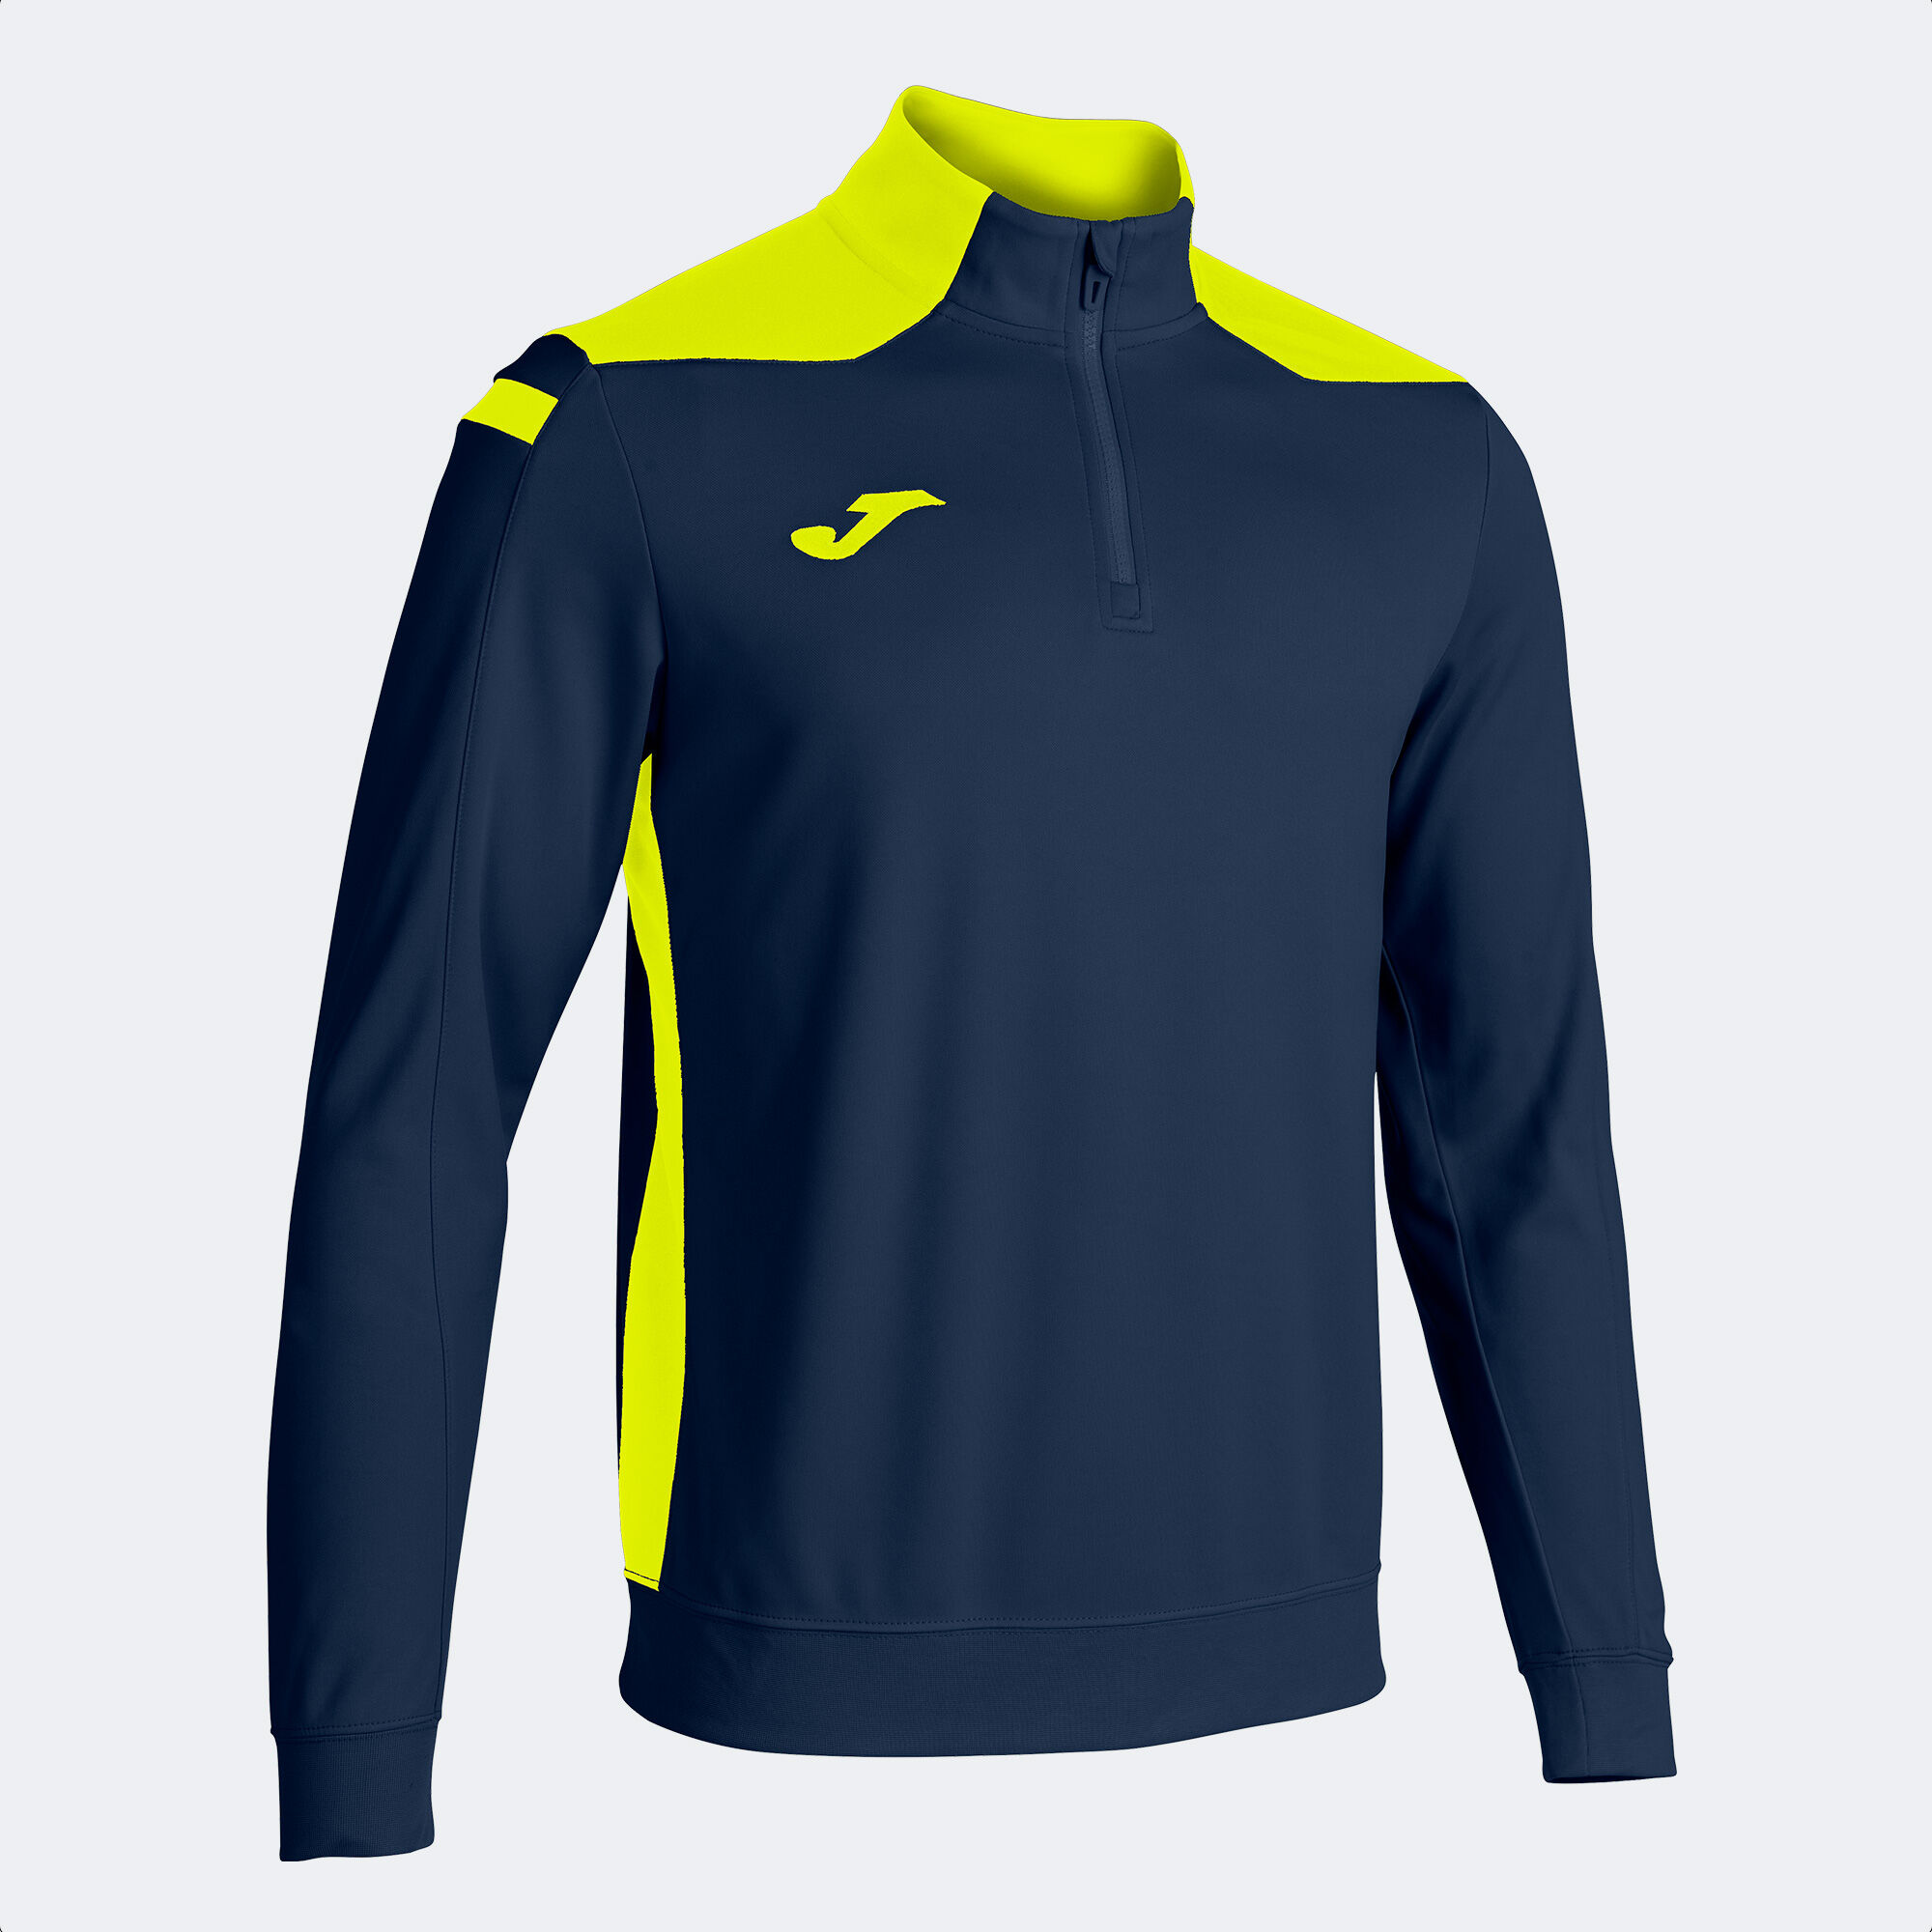 Sweat-shirt homme Championship VI bleu marine jaune fluo